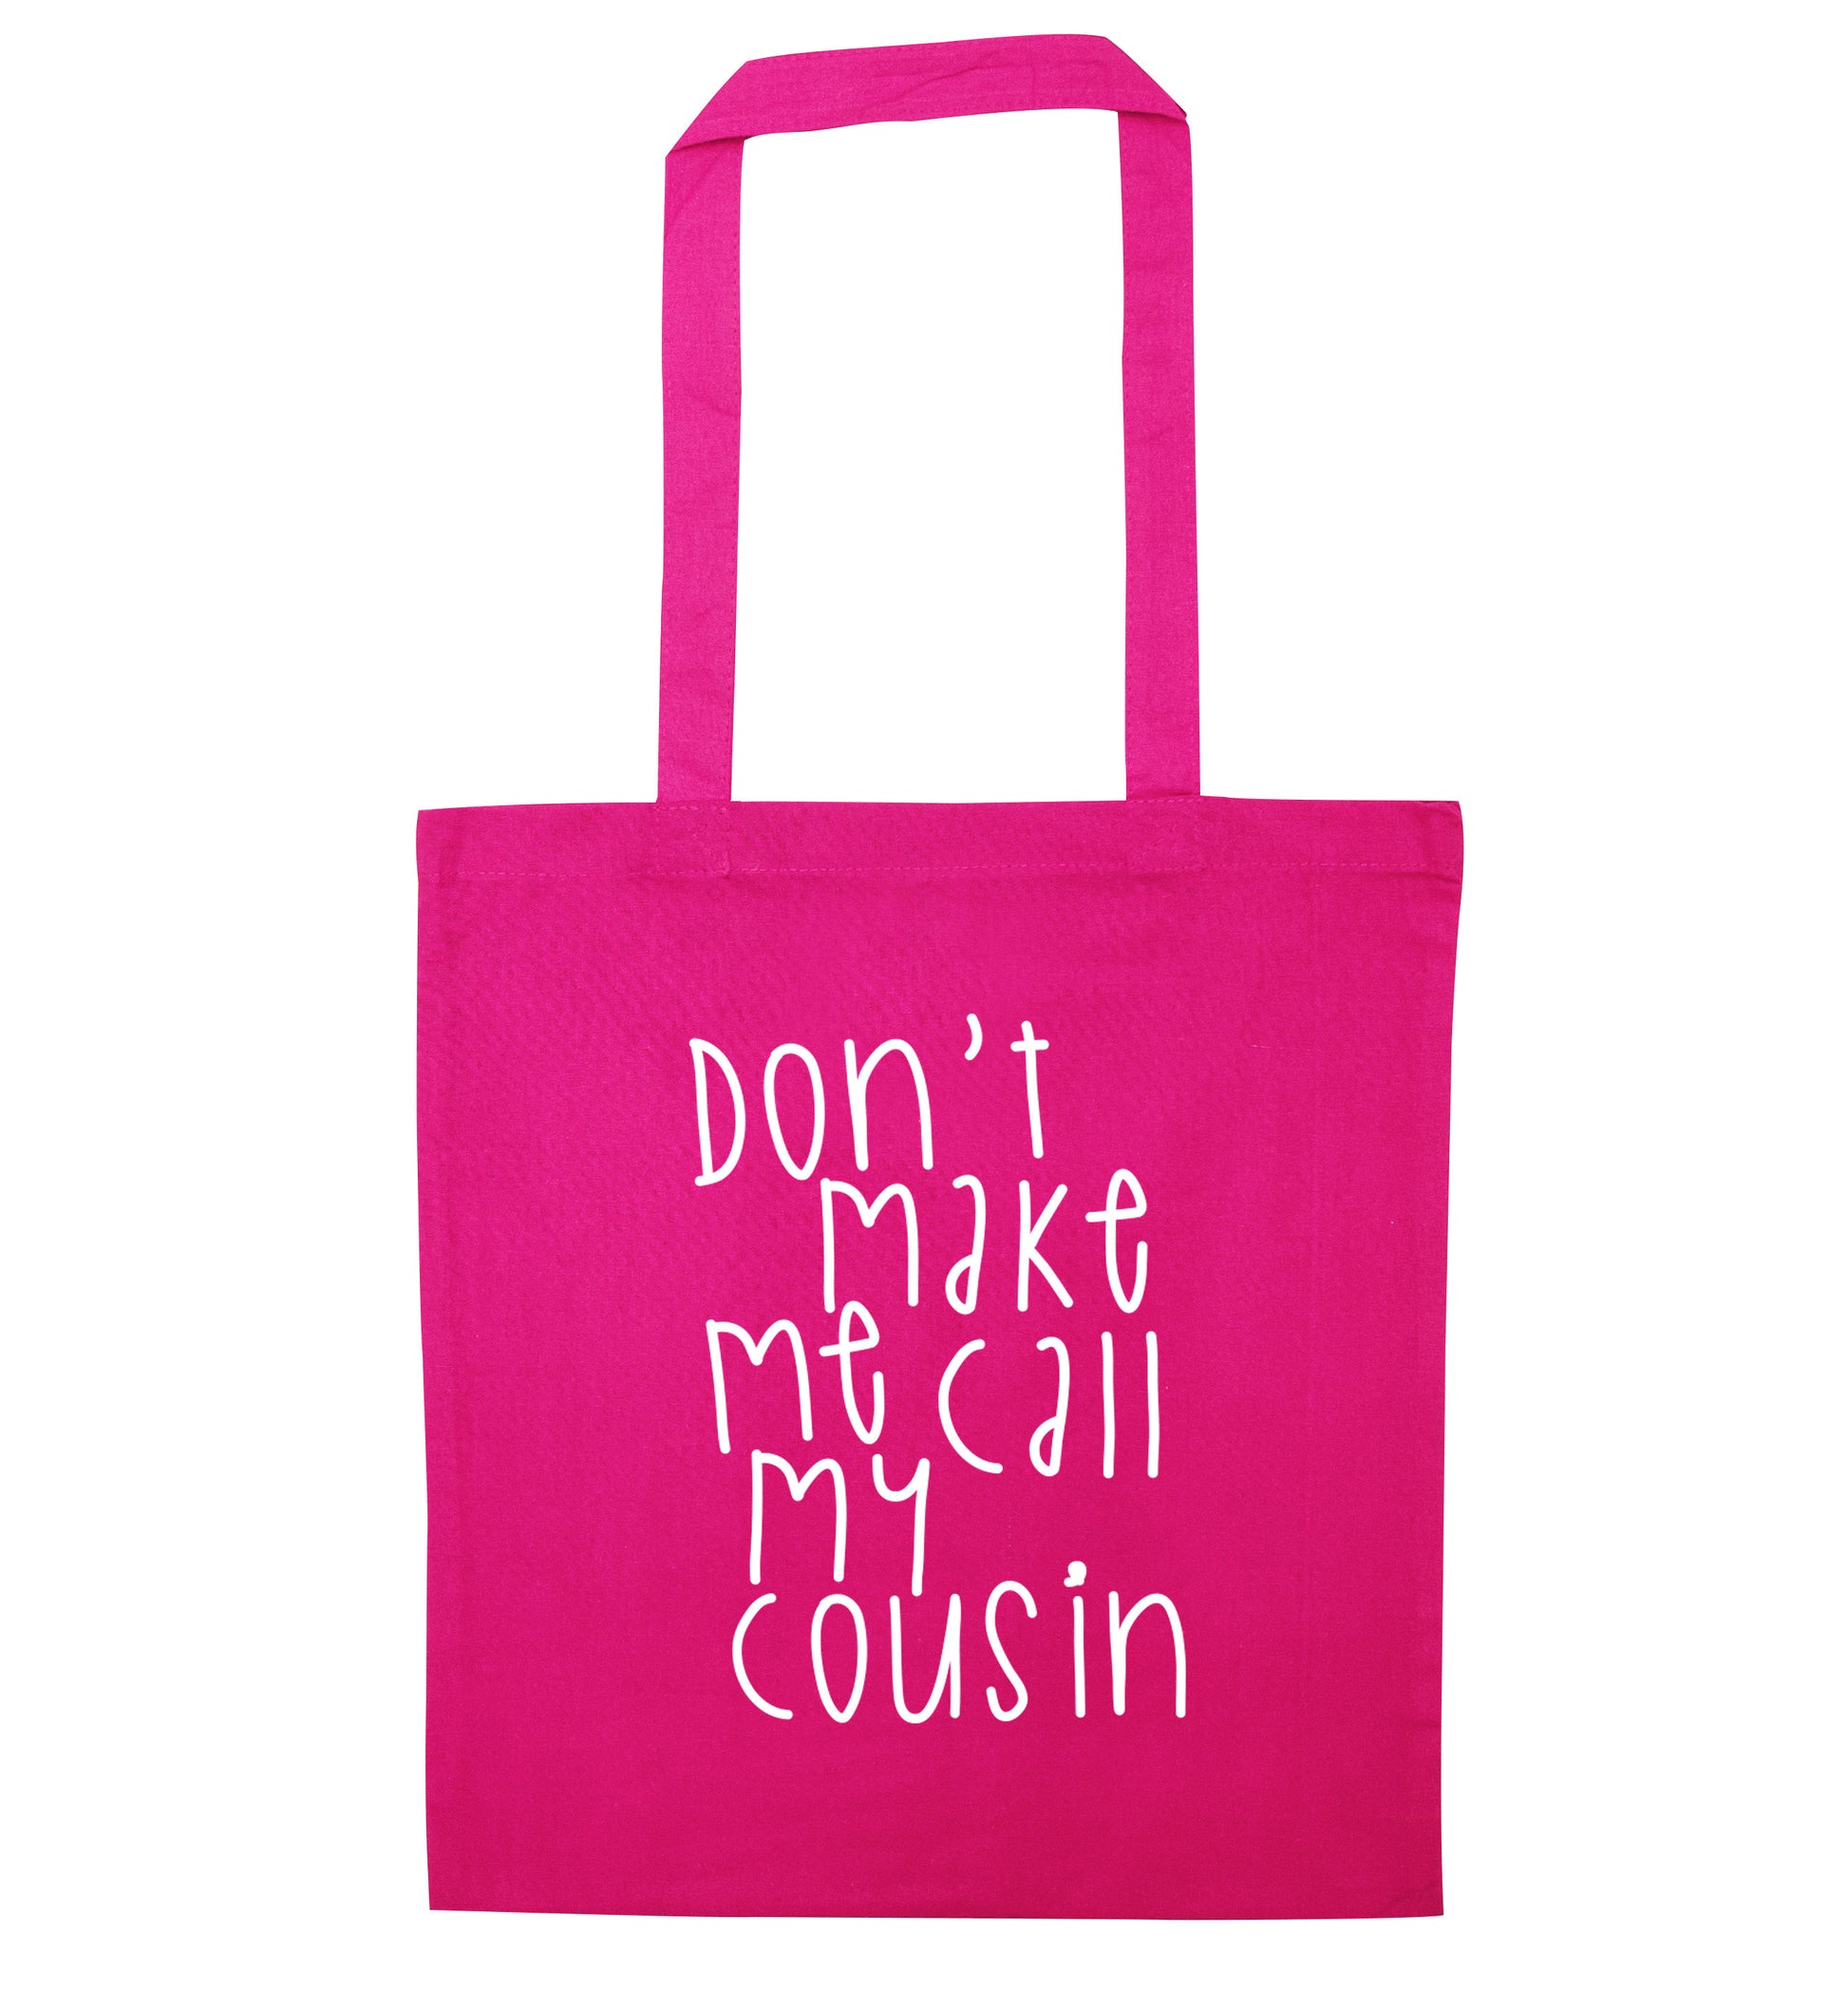 Don't make me call my cousin pink tote bag